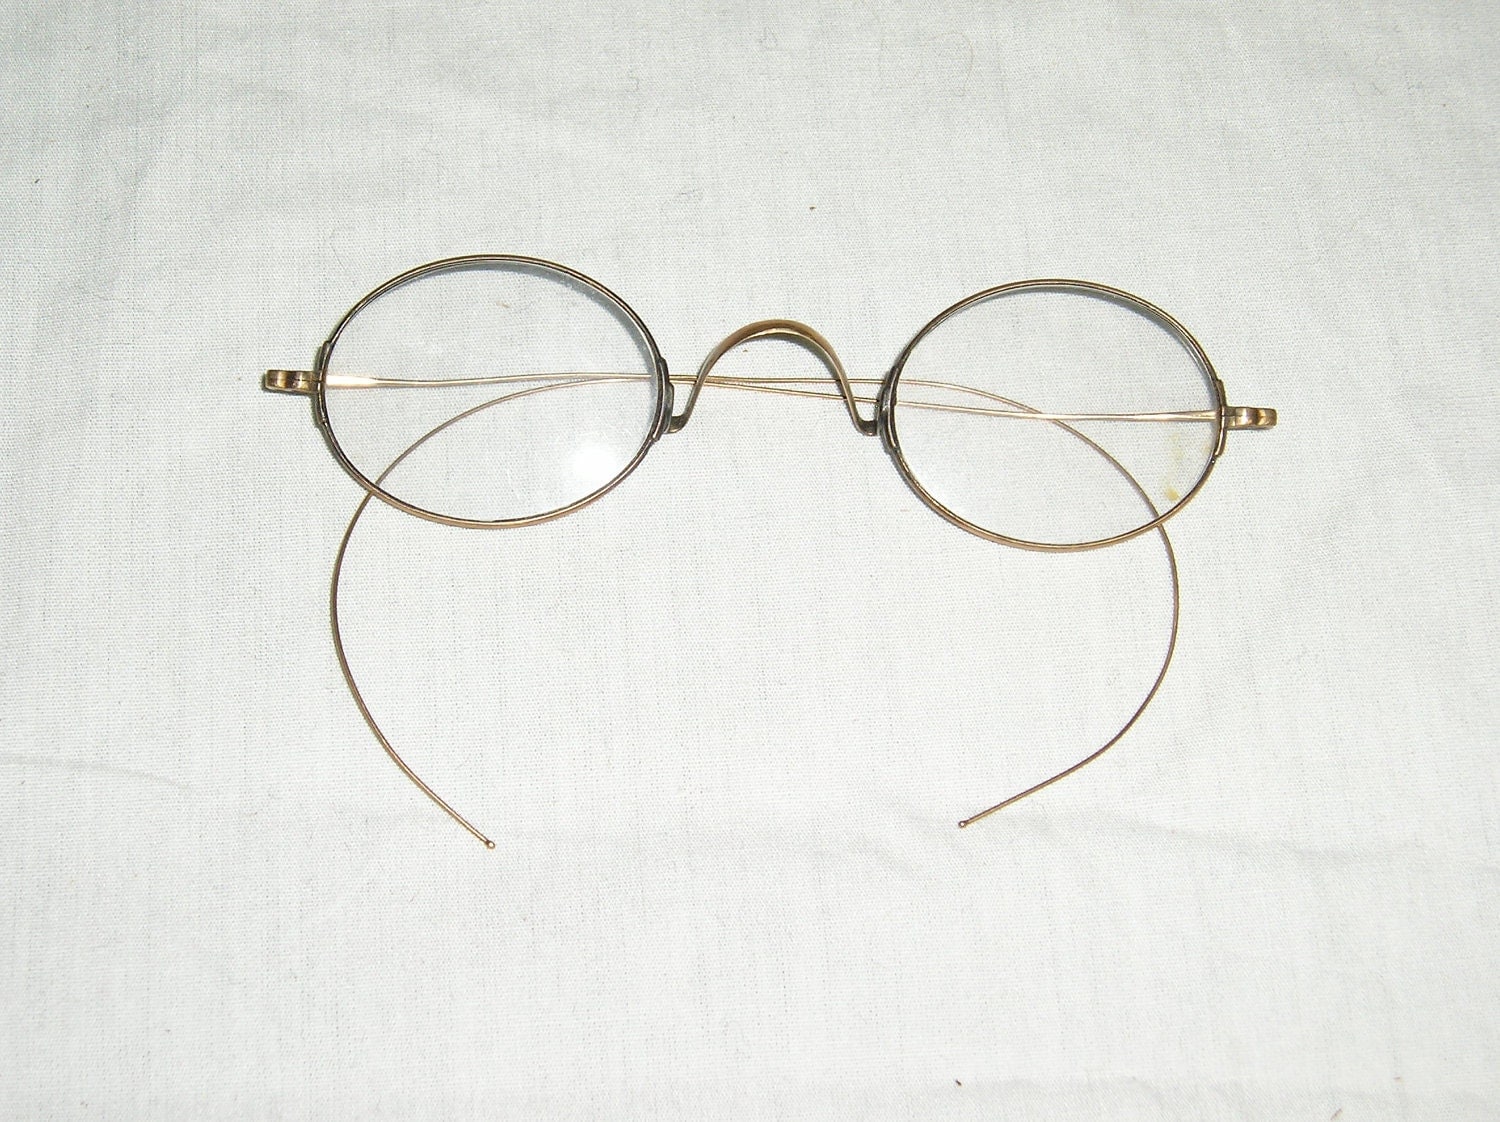 19th Century Glasses Eyewear By Martinsmercantile On Etsy